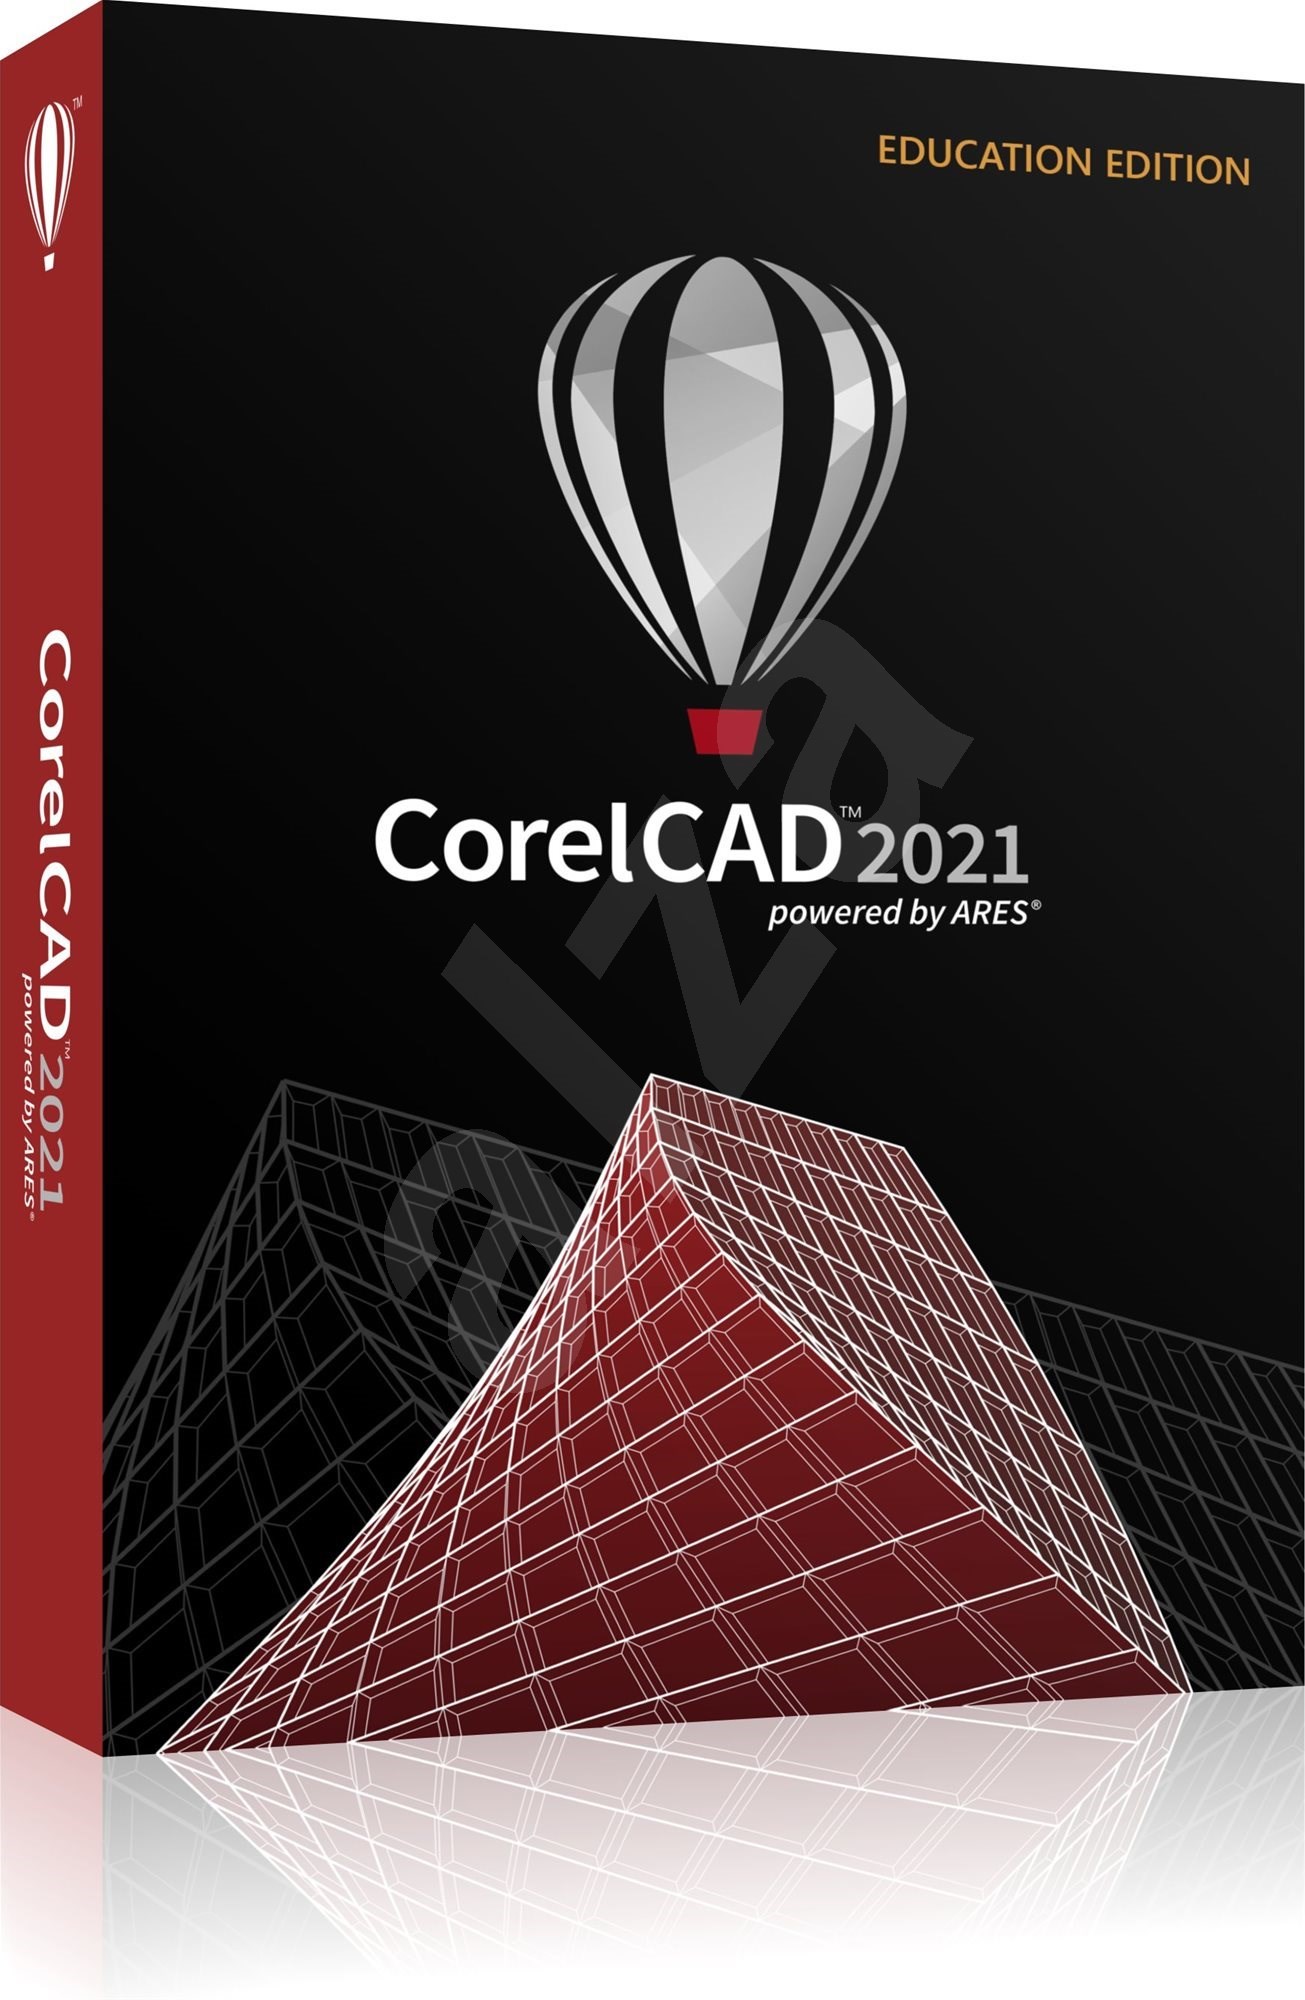 corelcad 2021 review